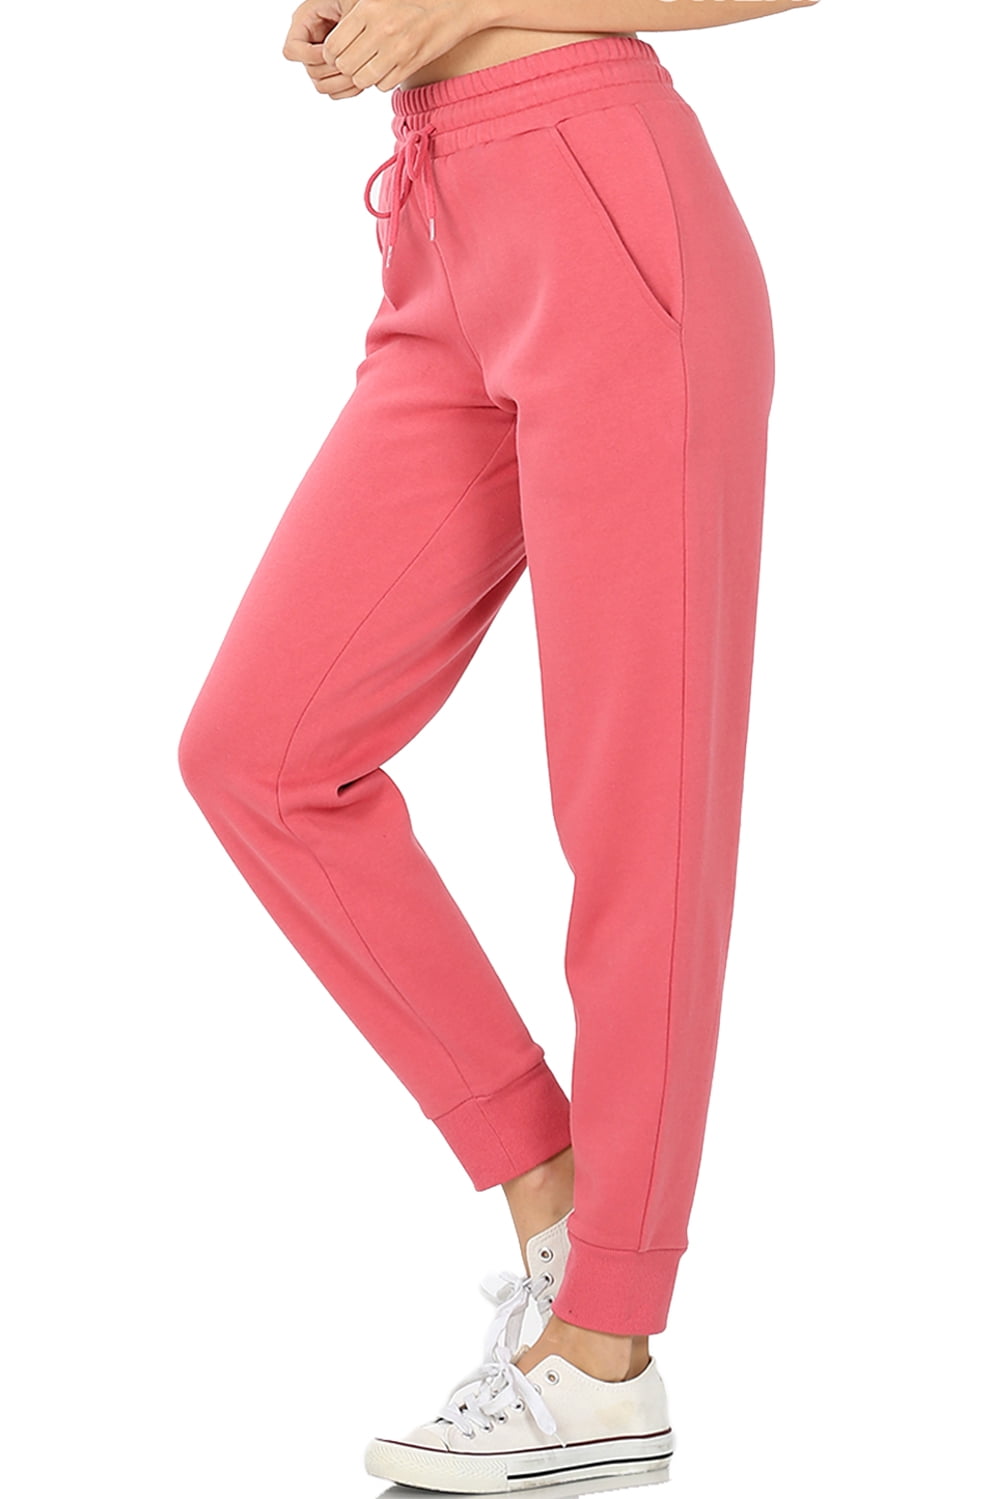 Women's Fleece Relax Fit Cropped Jogger Lounge Sweatpants Running Pants  (Fleece Rose, X-Large)